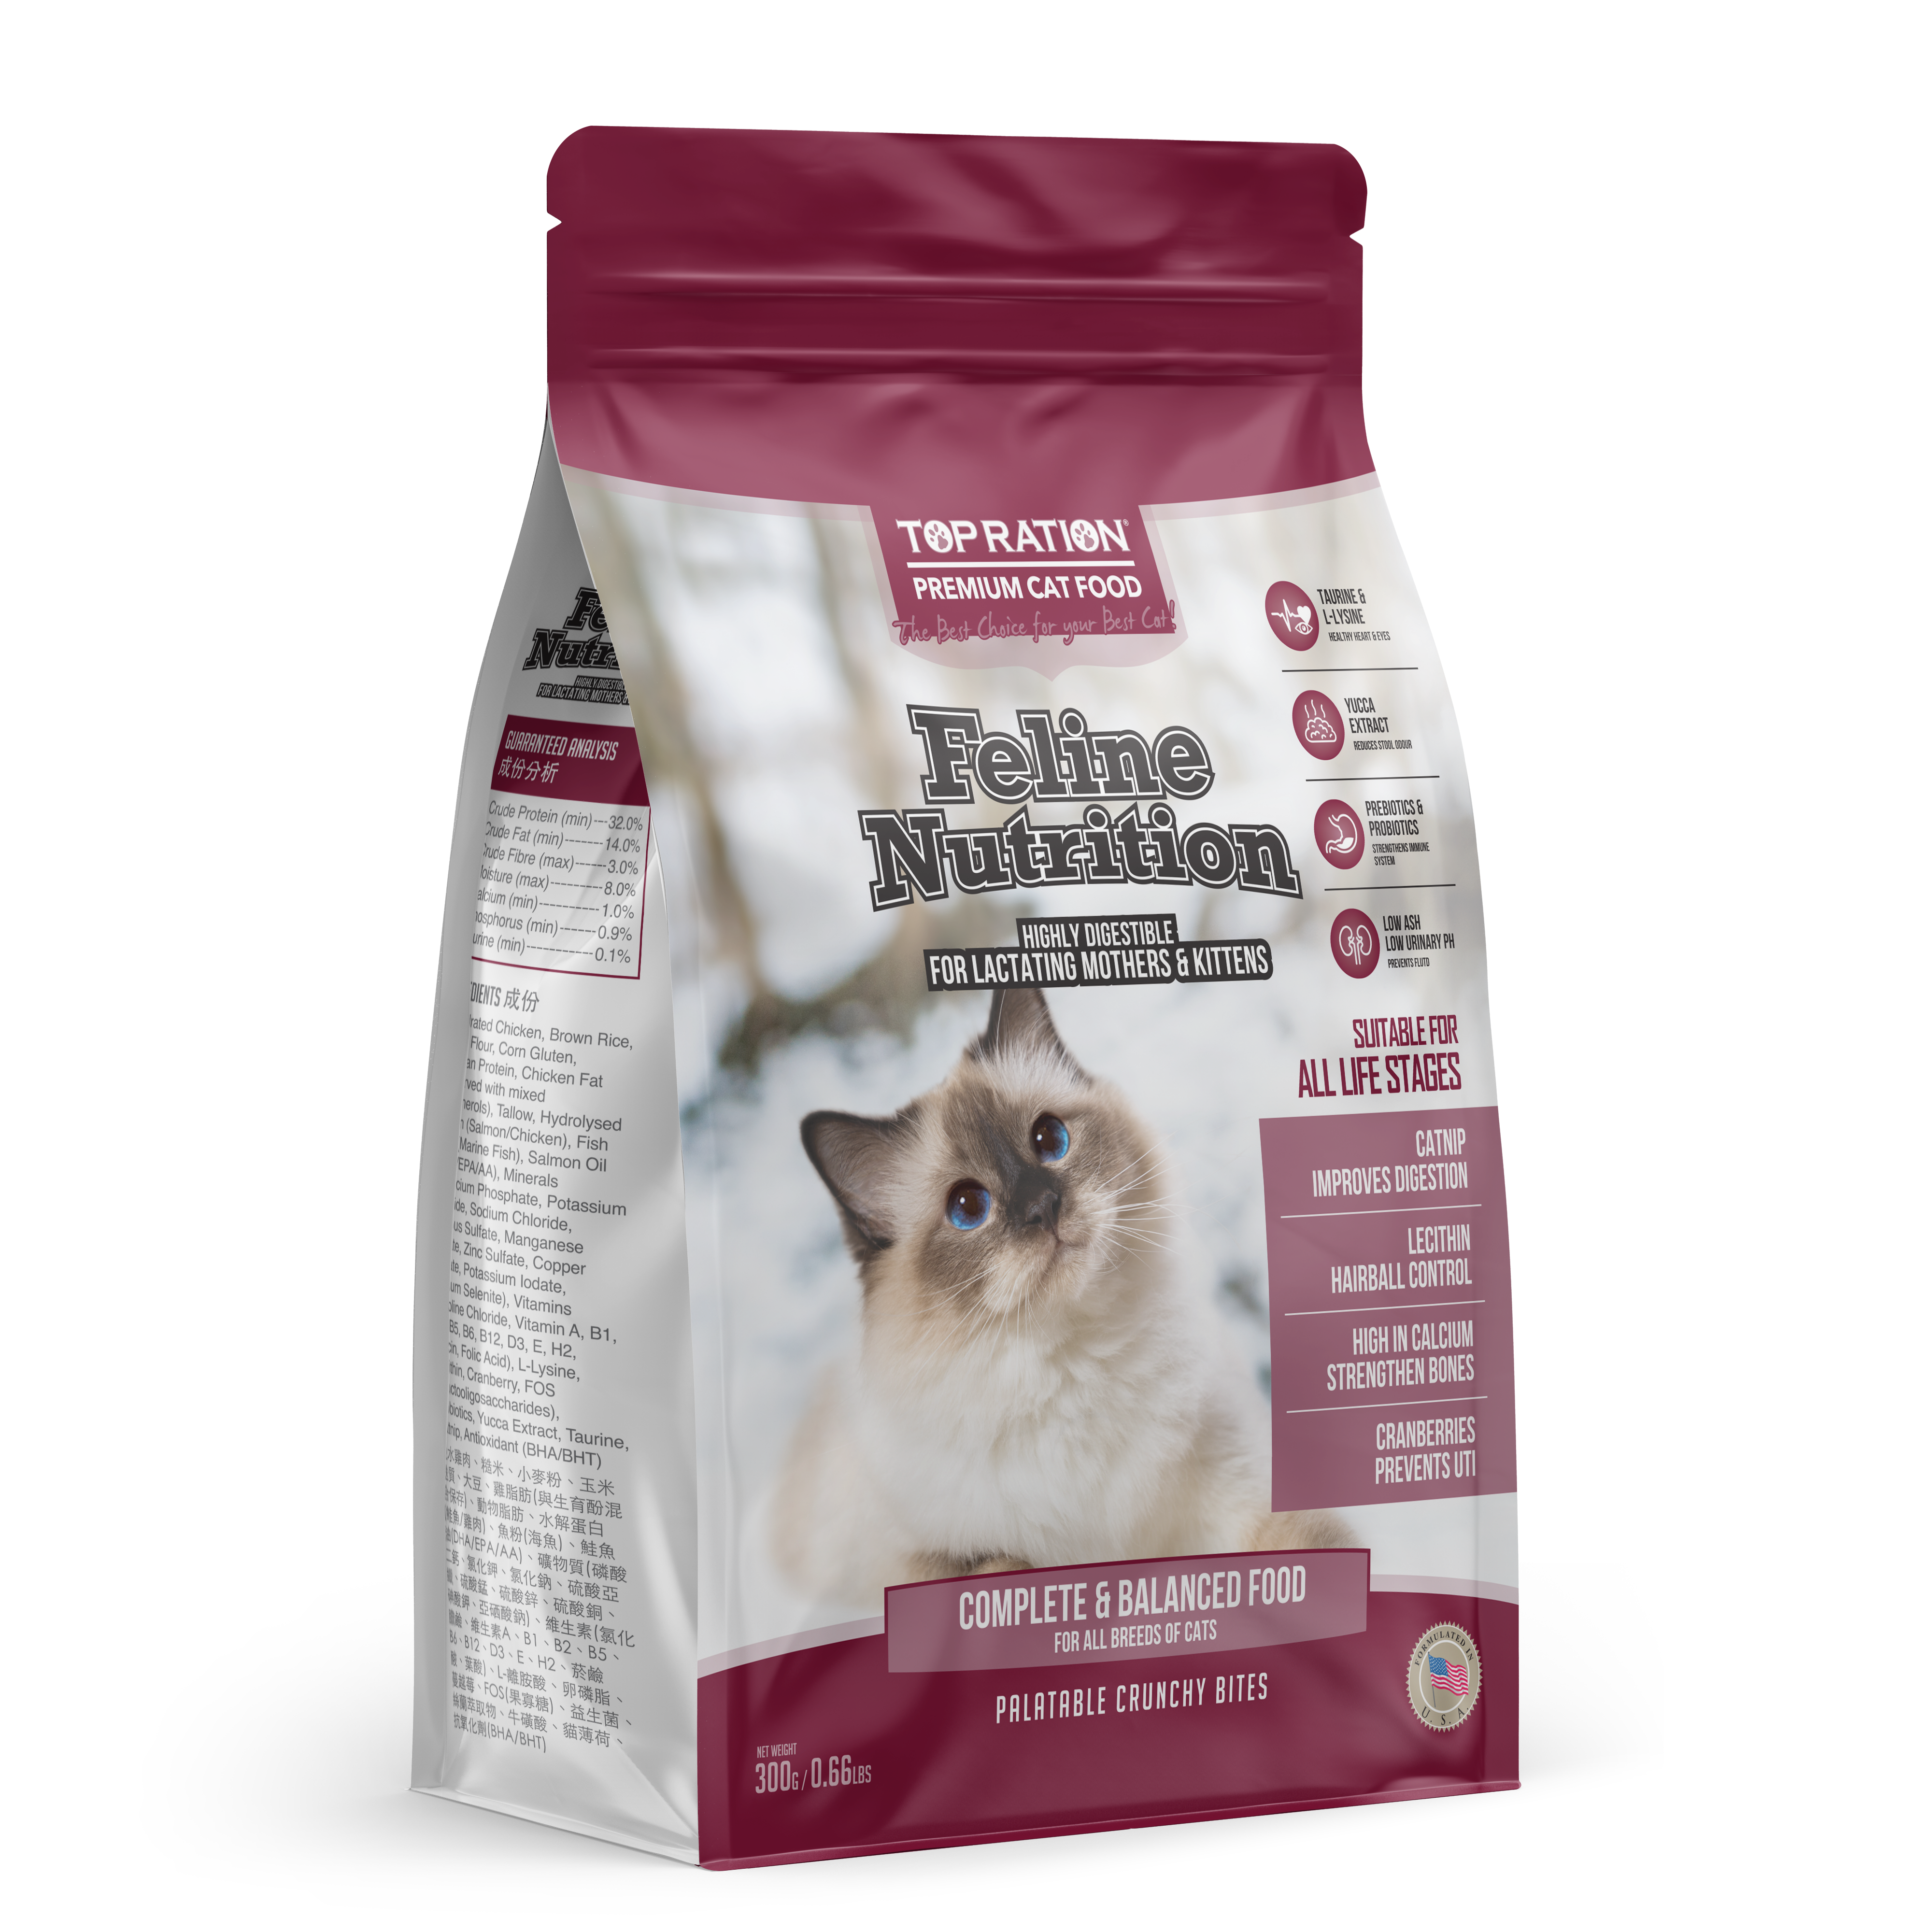 Top Ration Premium Dry Cat Food (Feline Nutrition)